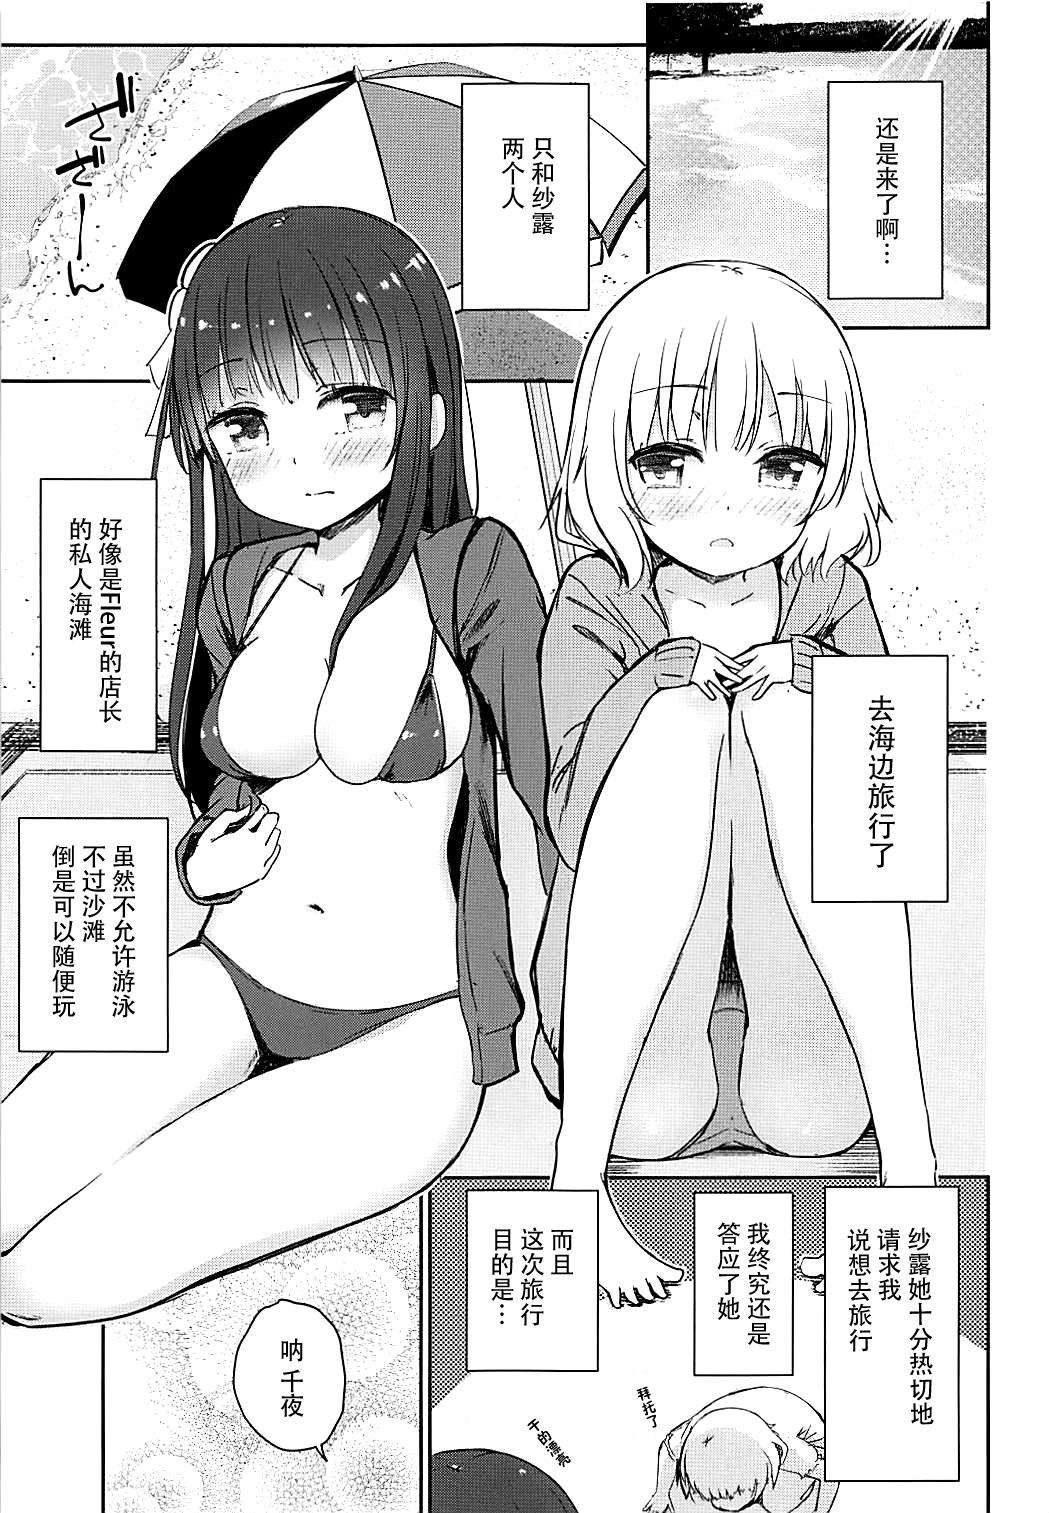 Playing Best Friend Sex 2 - Gochuumon wa usagi desu ka Online - Page 4